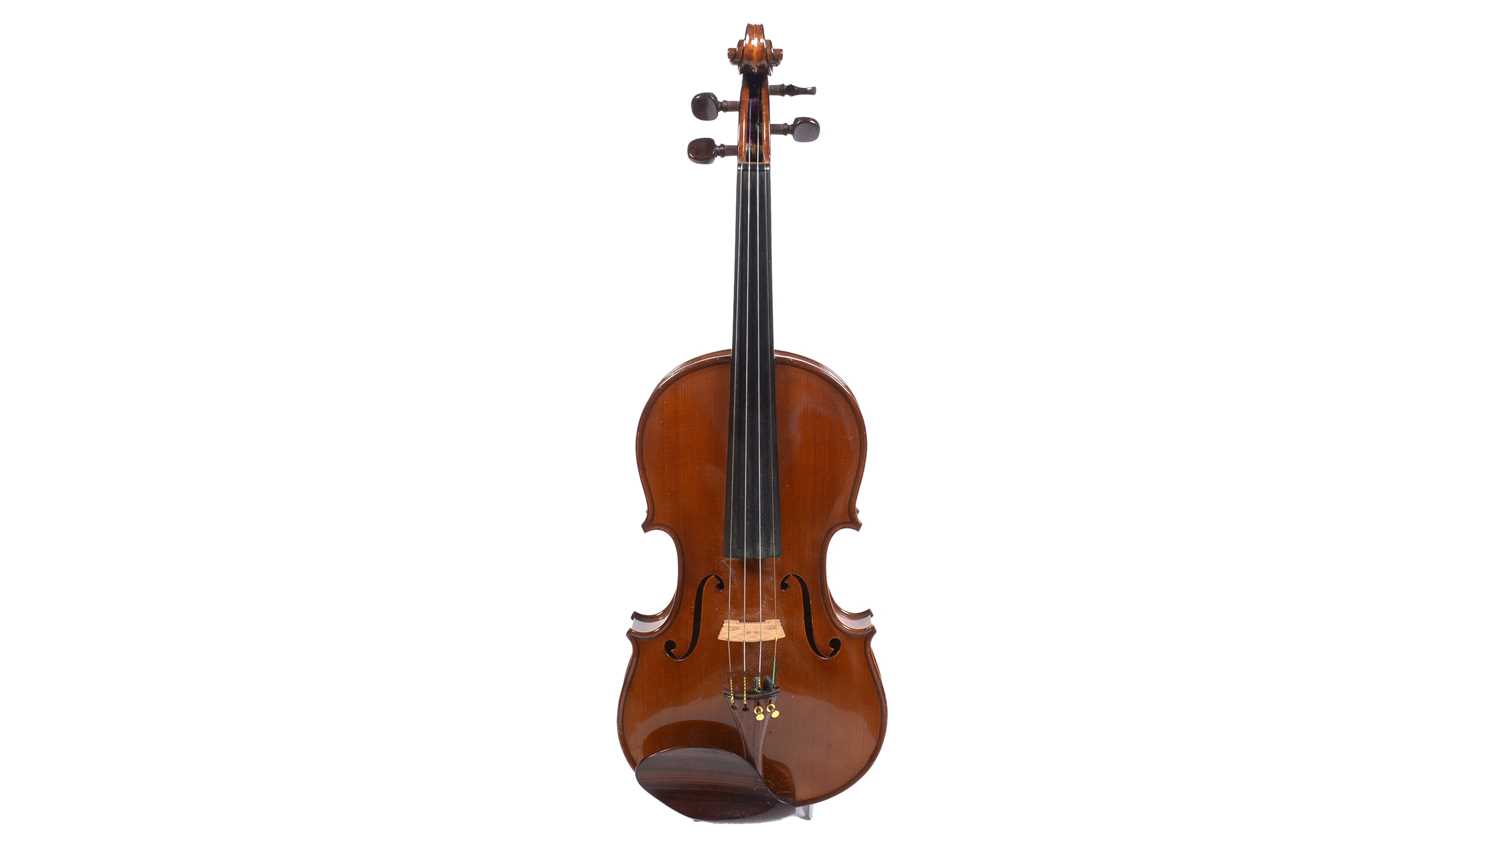 Lot 779 - Good quality violin